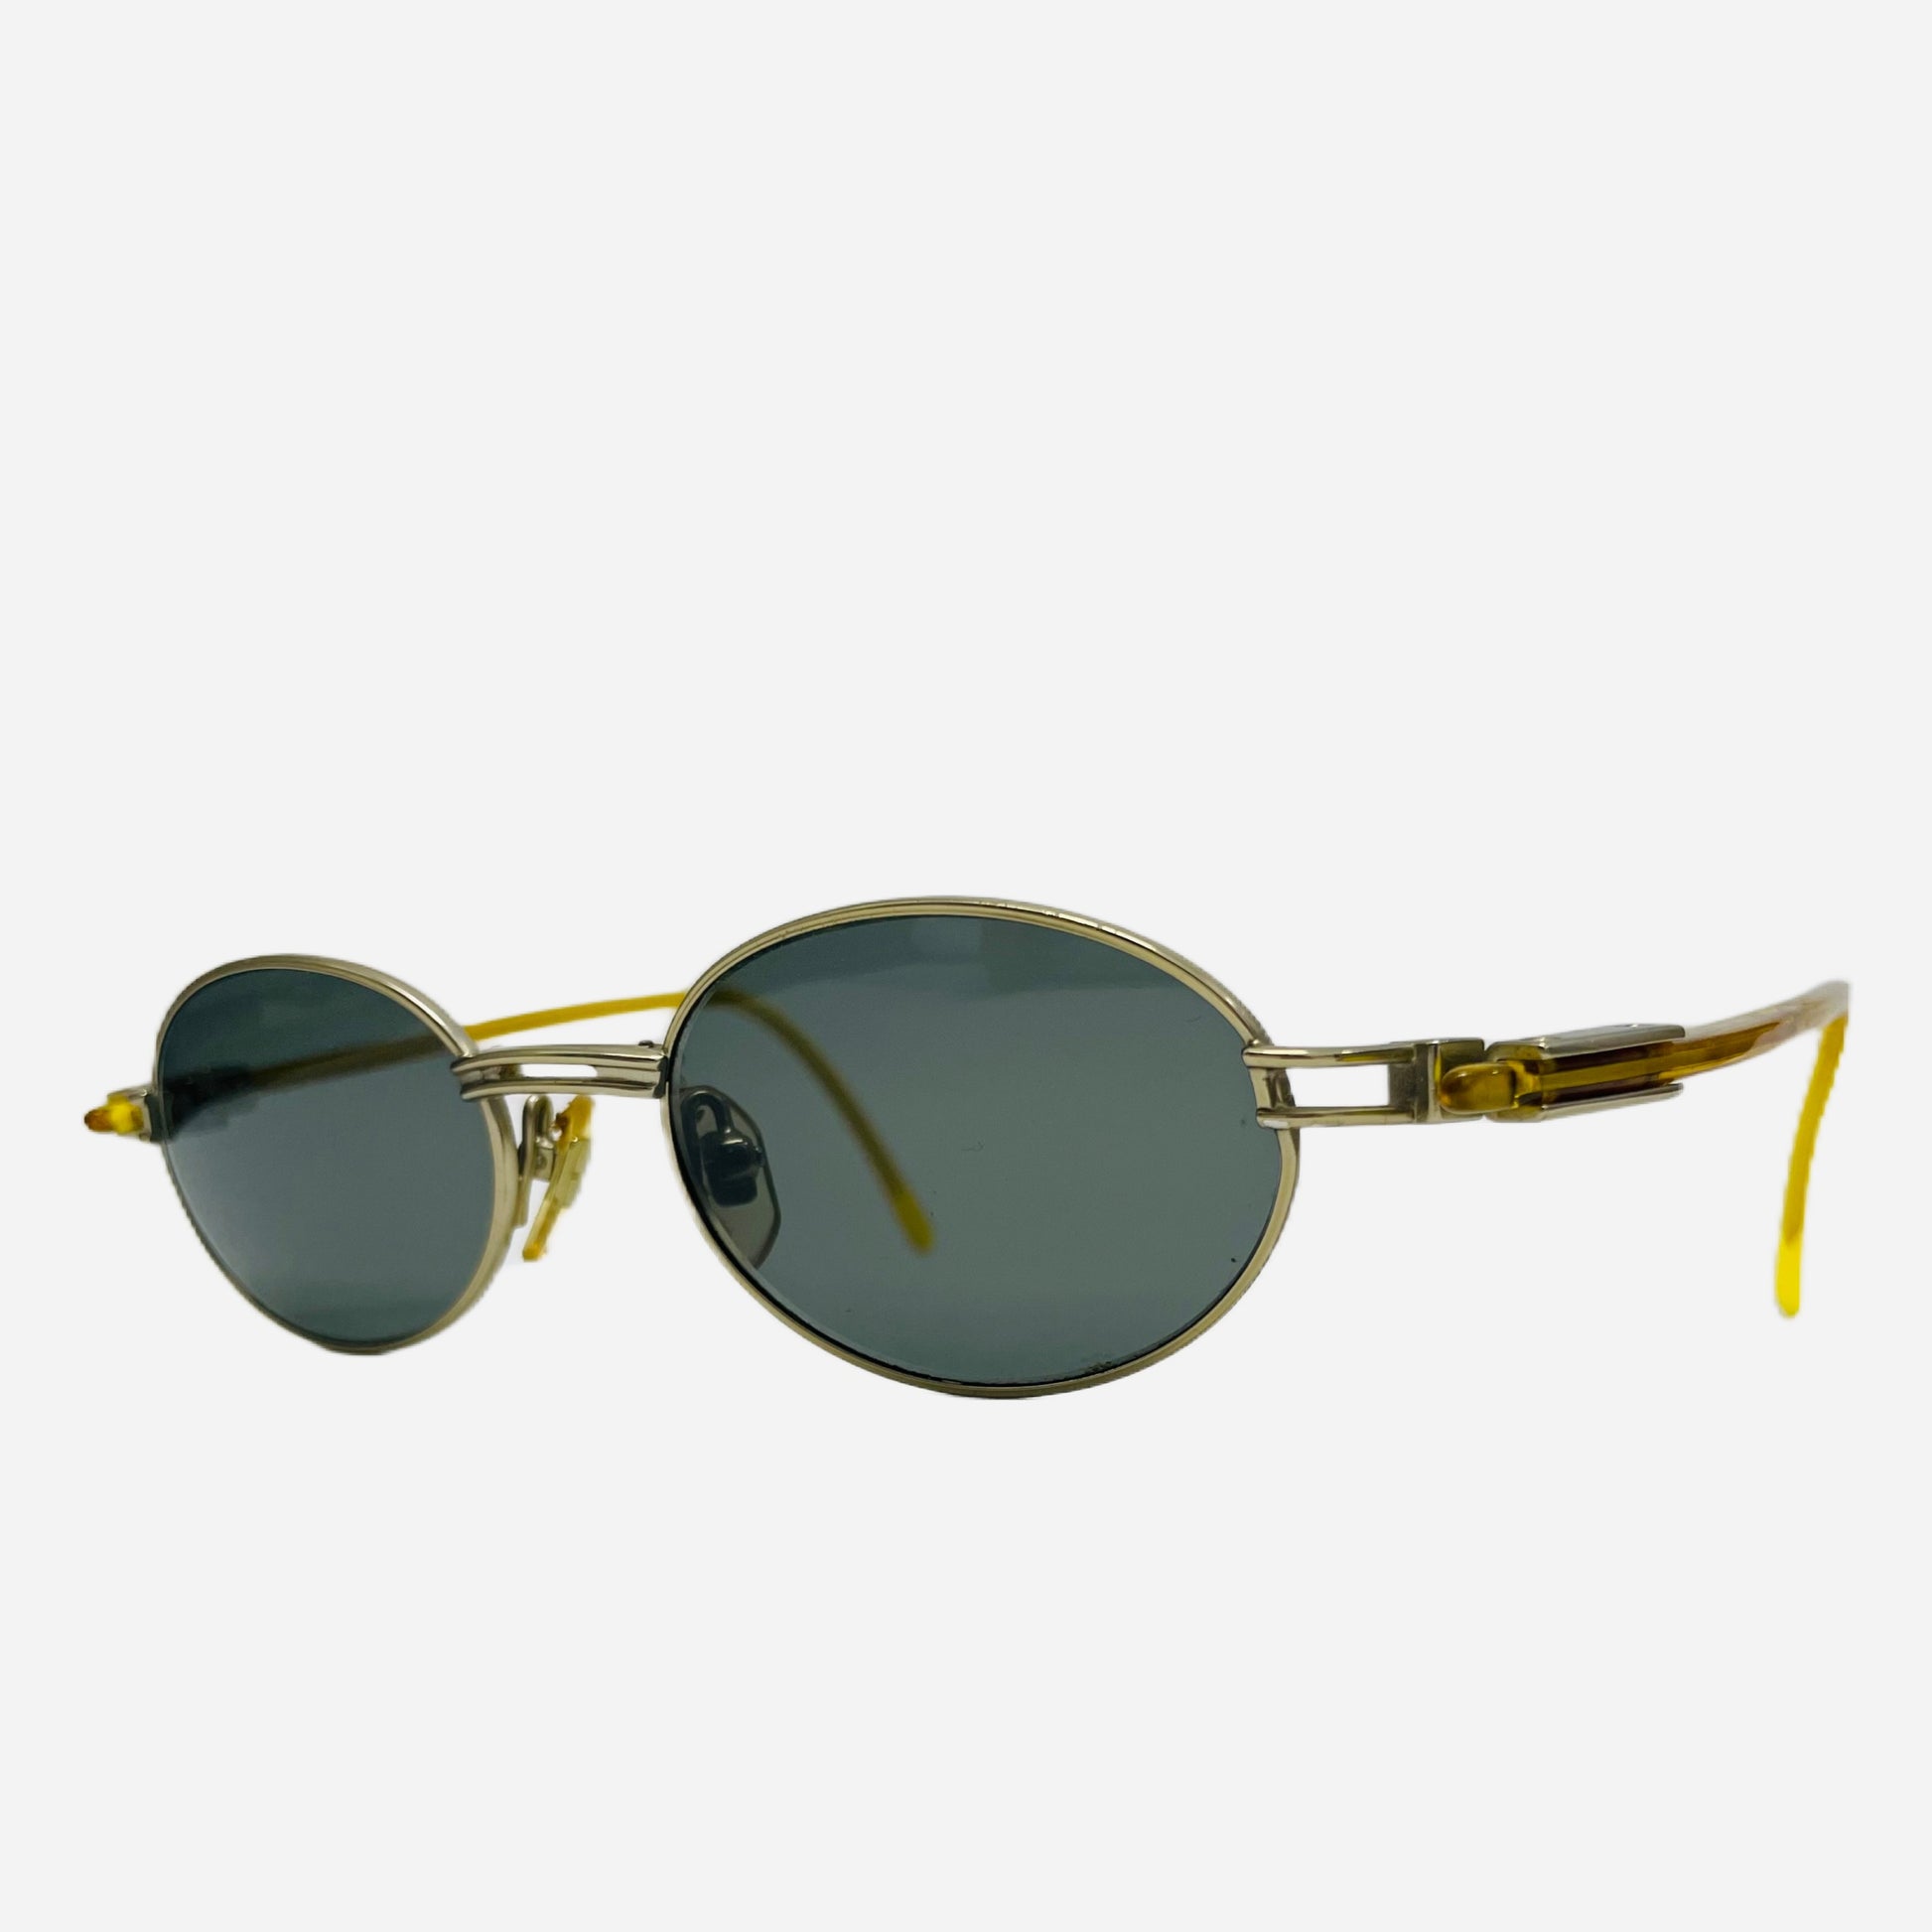 Vintage-Yohji-Yamamoto-Sonnenbrille-Sunglasses-52-7202-the-seekers-front